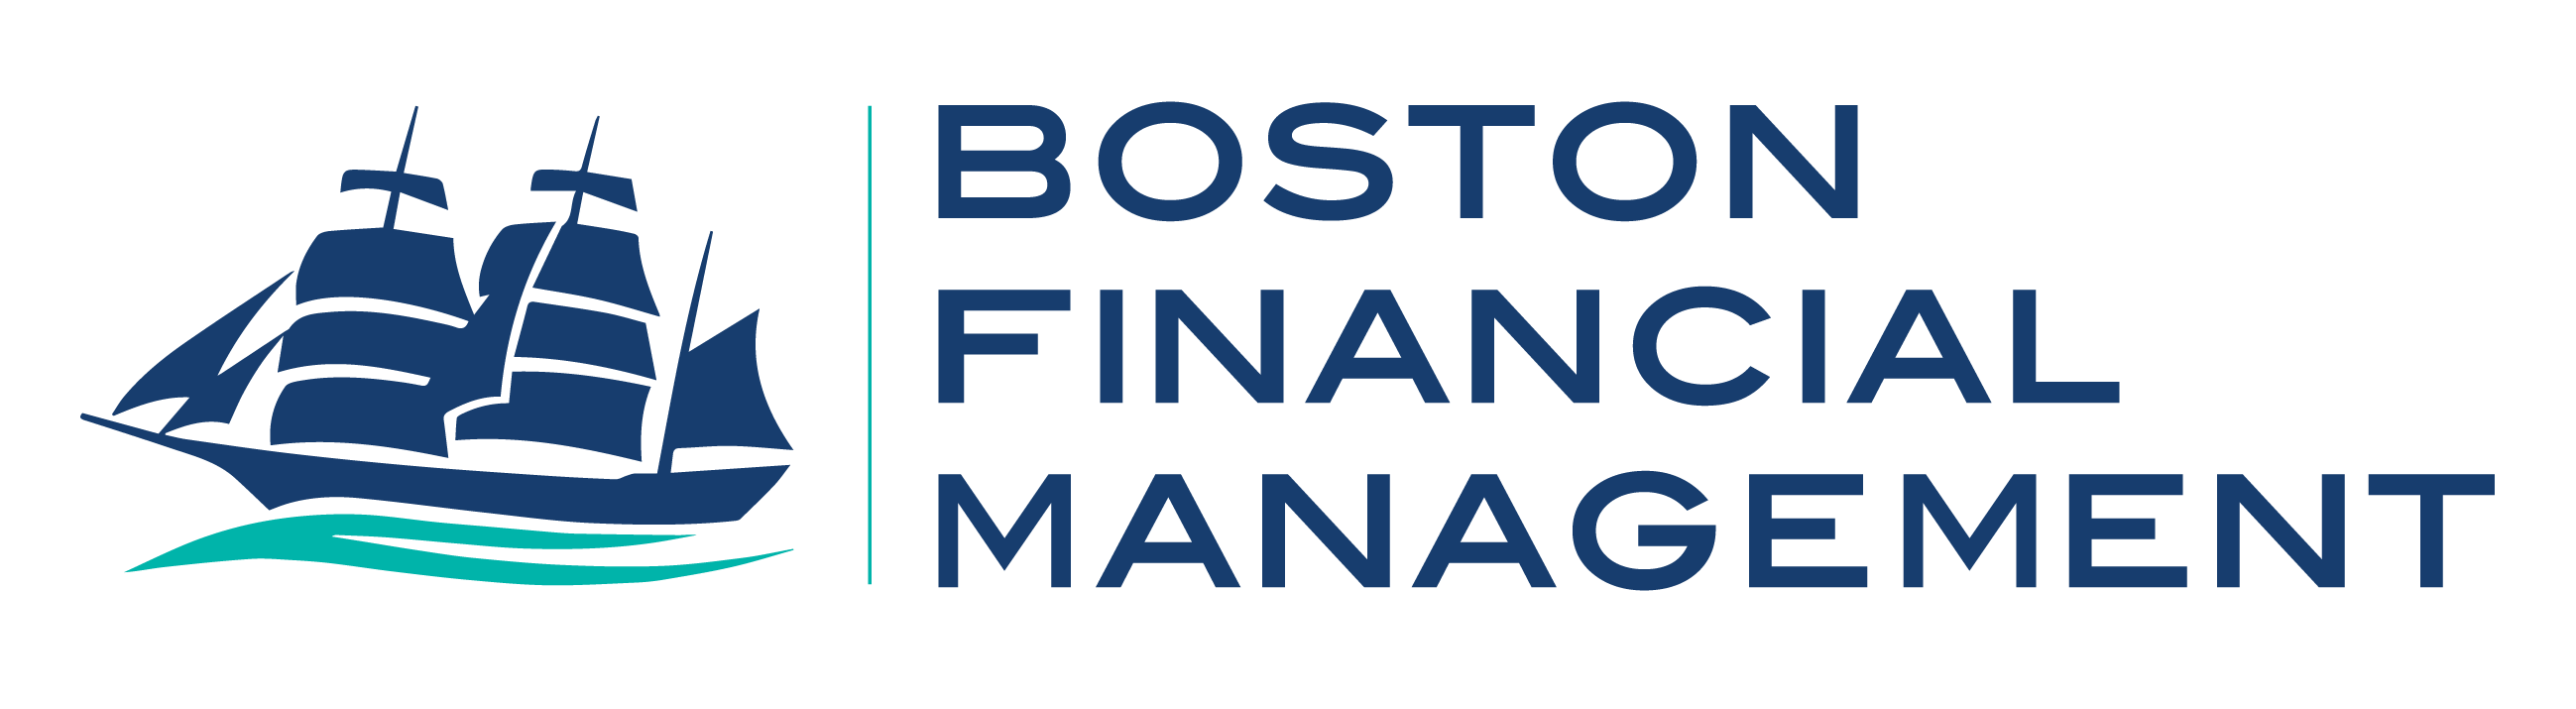 BFM Logo - transparent (1).png